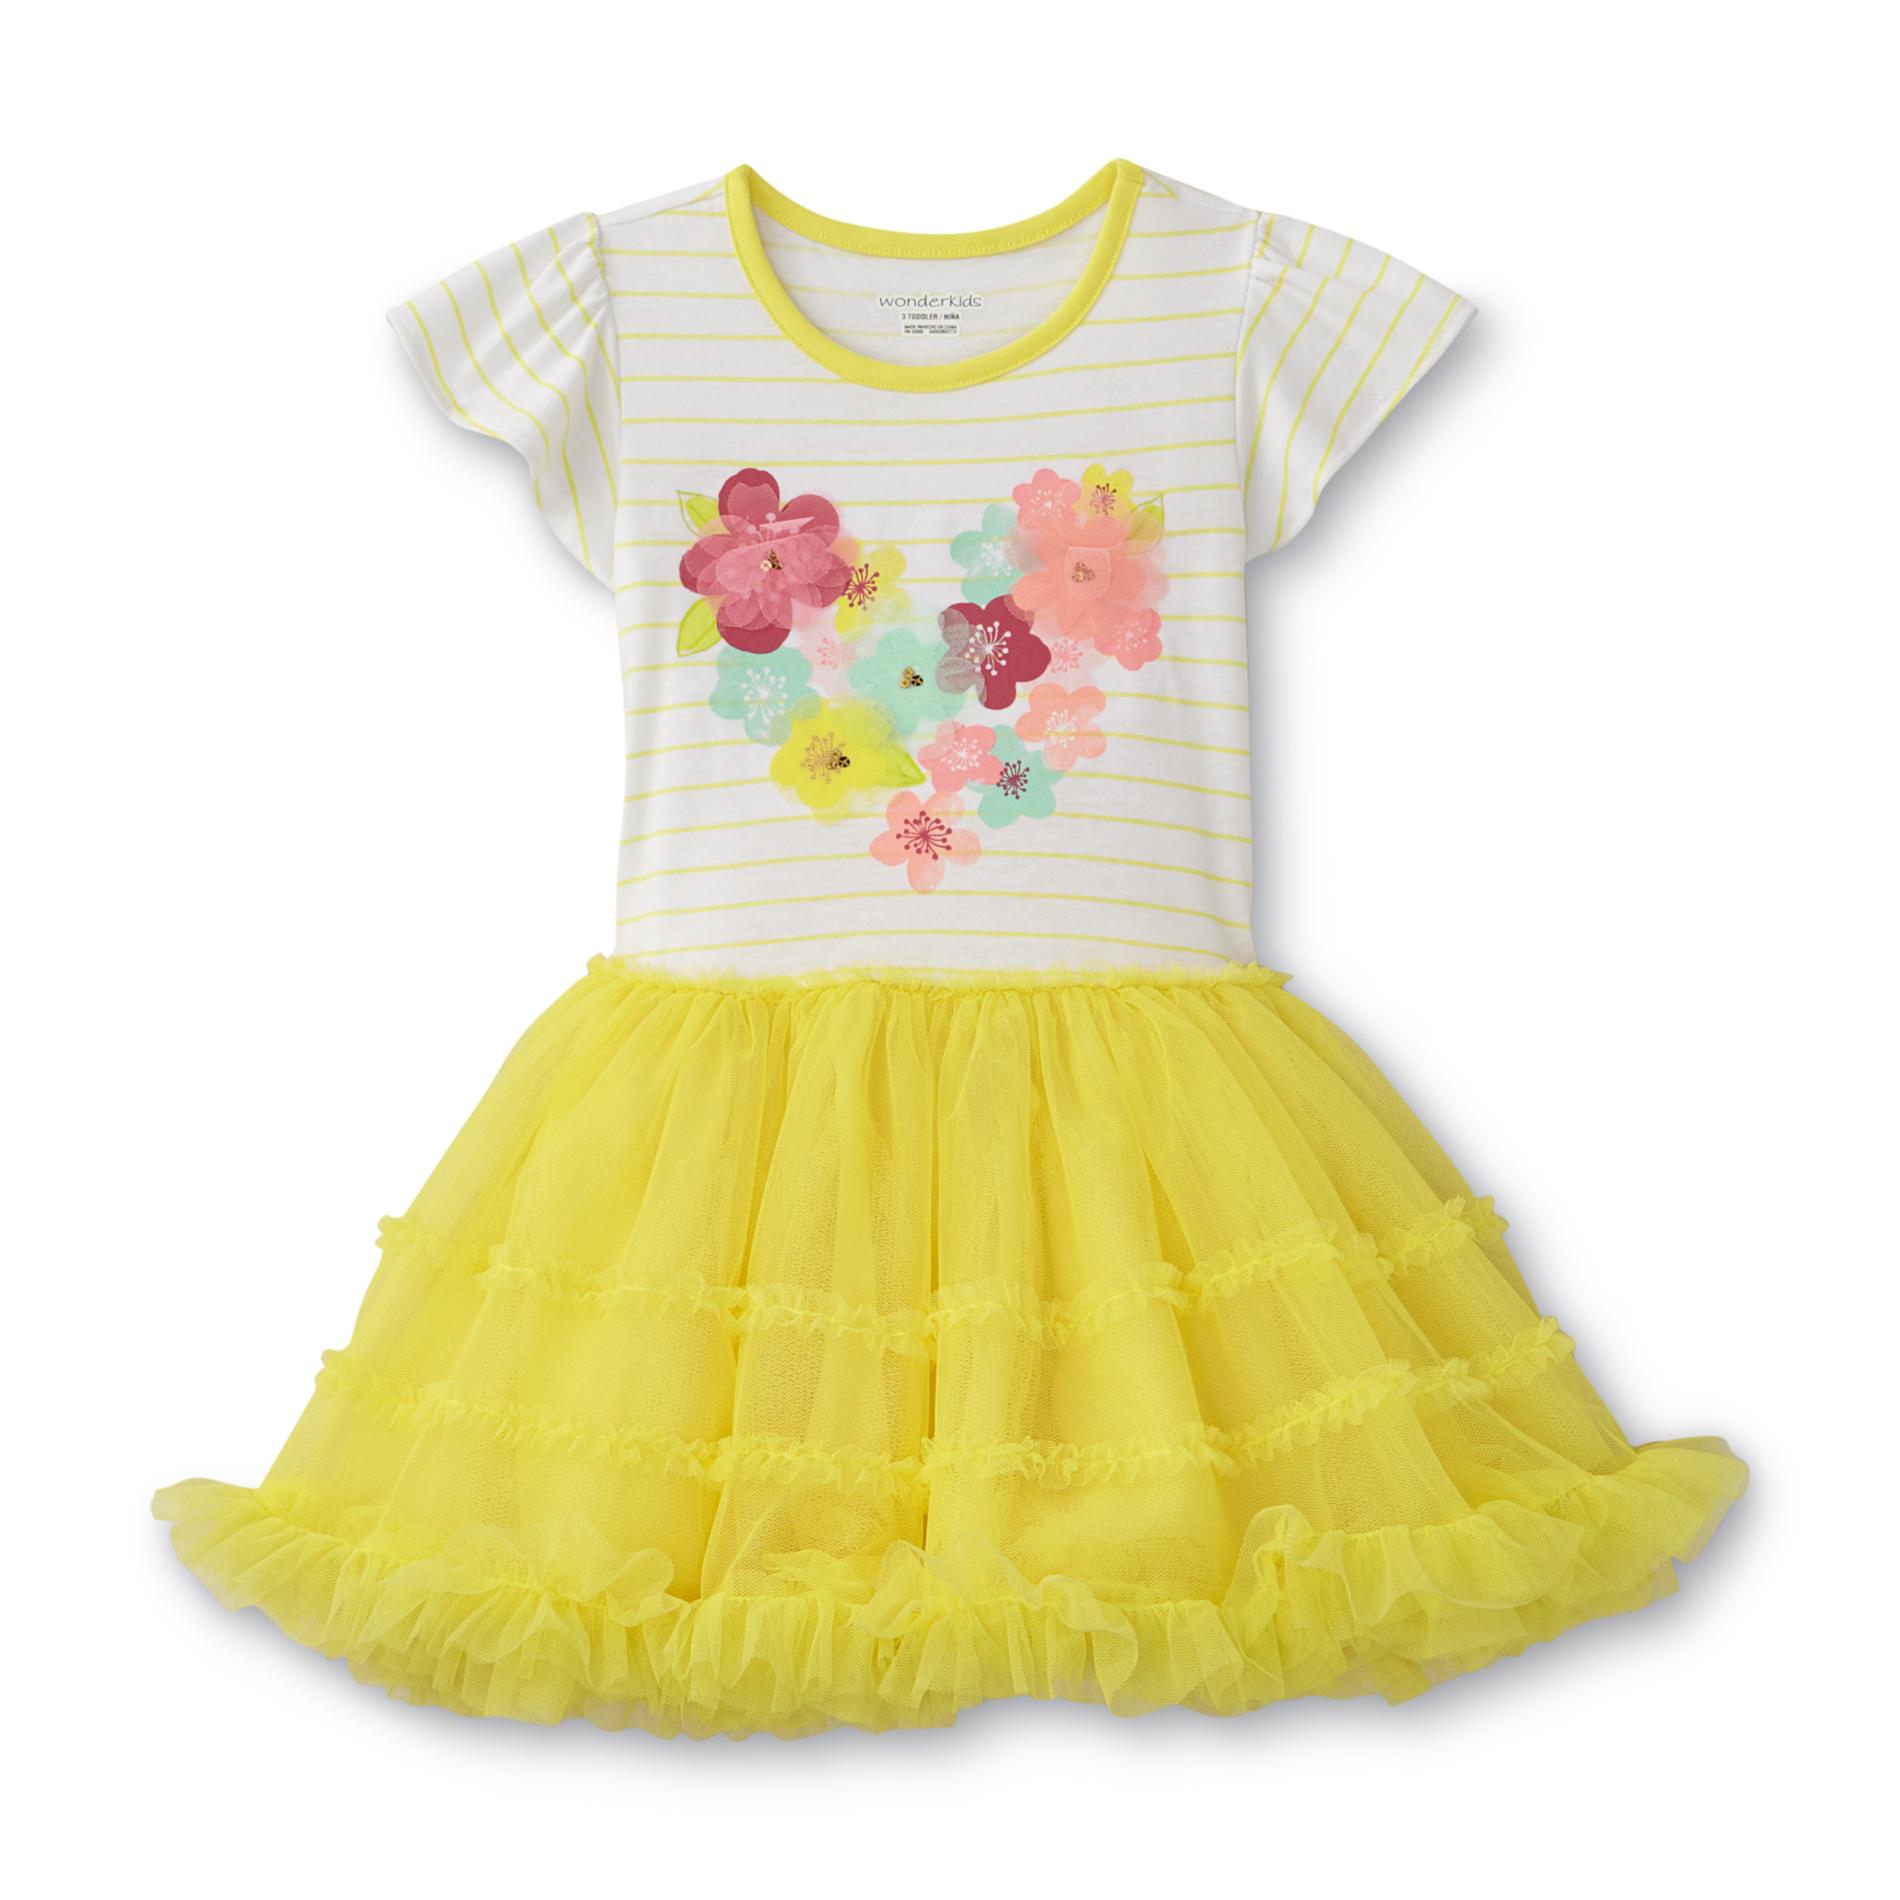 Toddler Girl's Tutu Dress - Striped/Floral